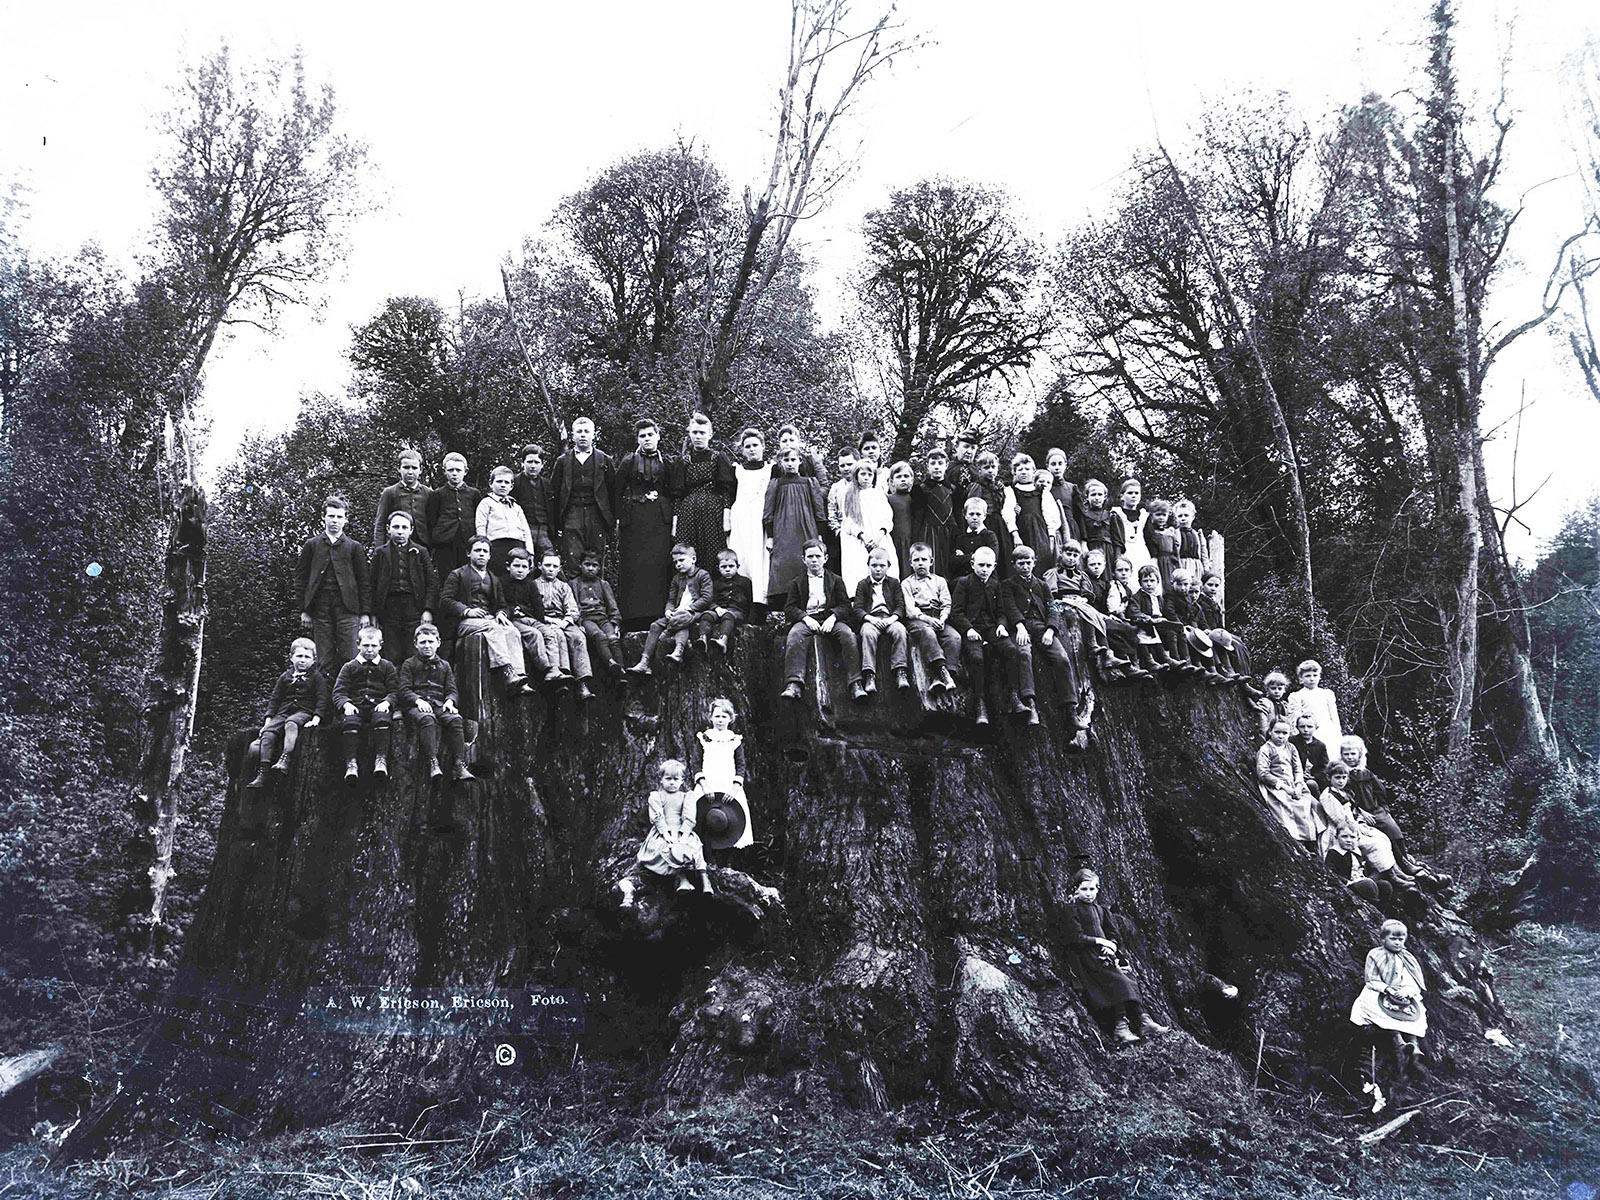 Children pose atop a giant redwood stump.